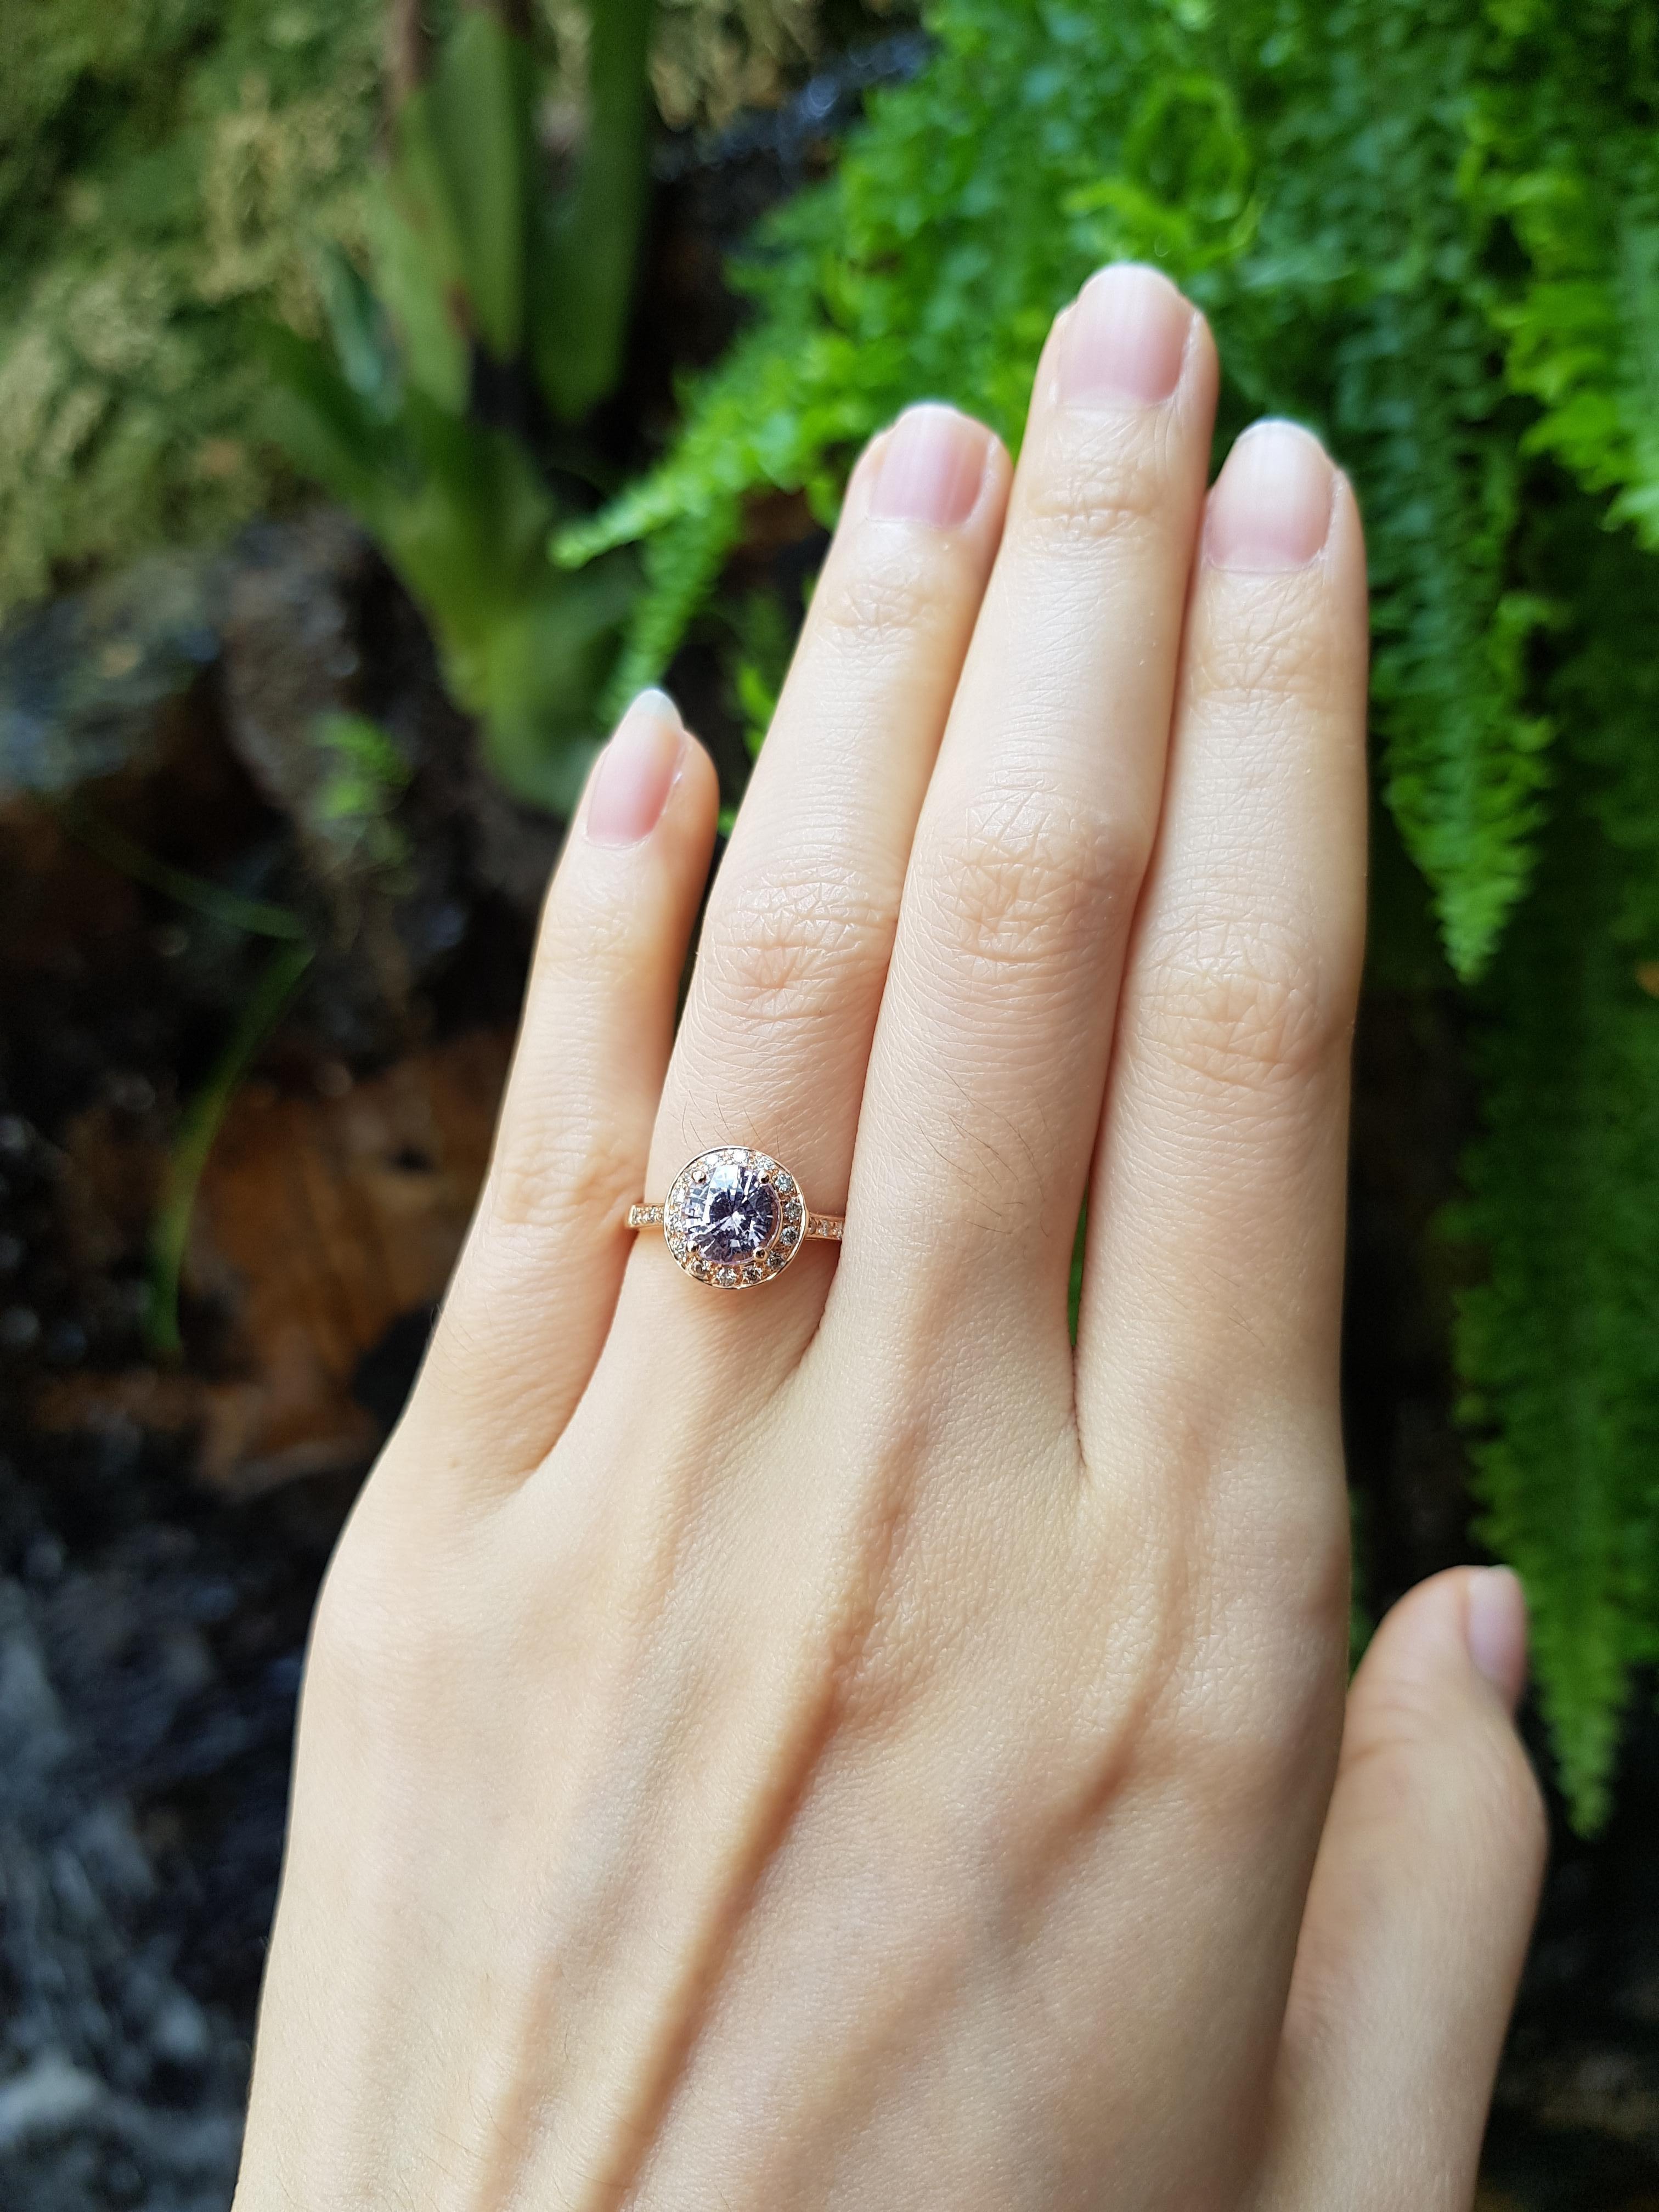 Pink Sapphire 1.55 carats with Brown Diamond 0.21 carat Ring set in 18 Karat Rose Gold Settings

Width: 1.0 cm
Length: 1.0 cm 
Ring Size: 51

